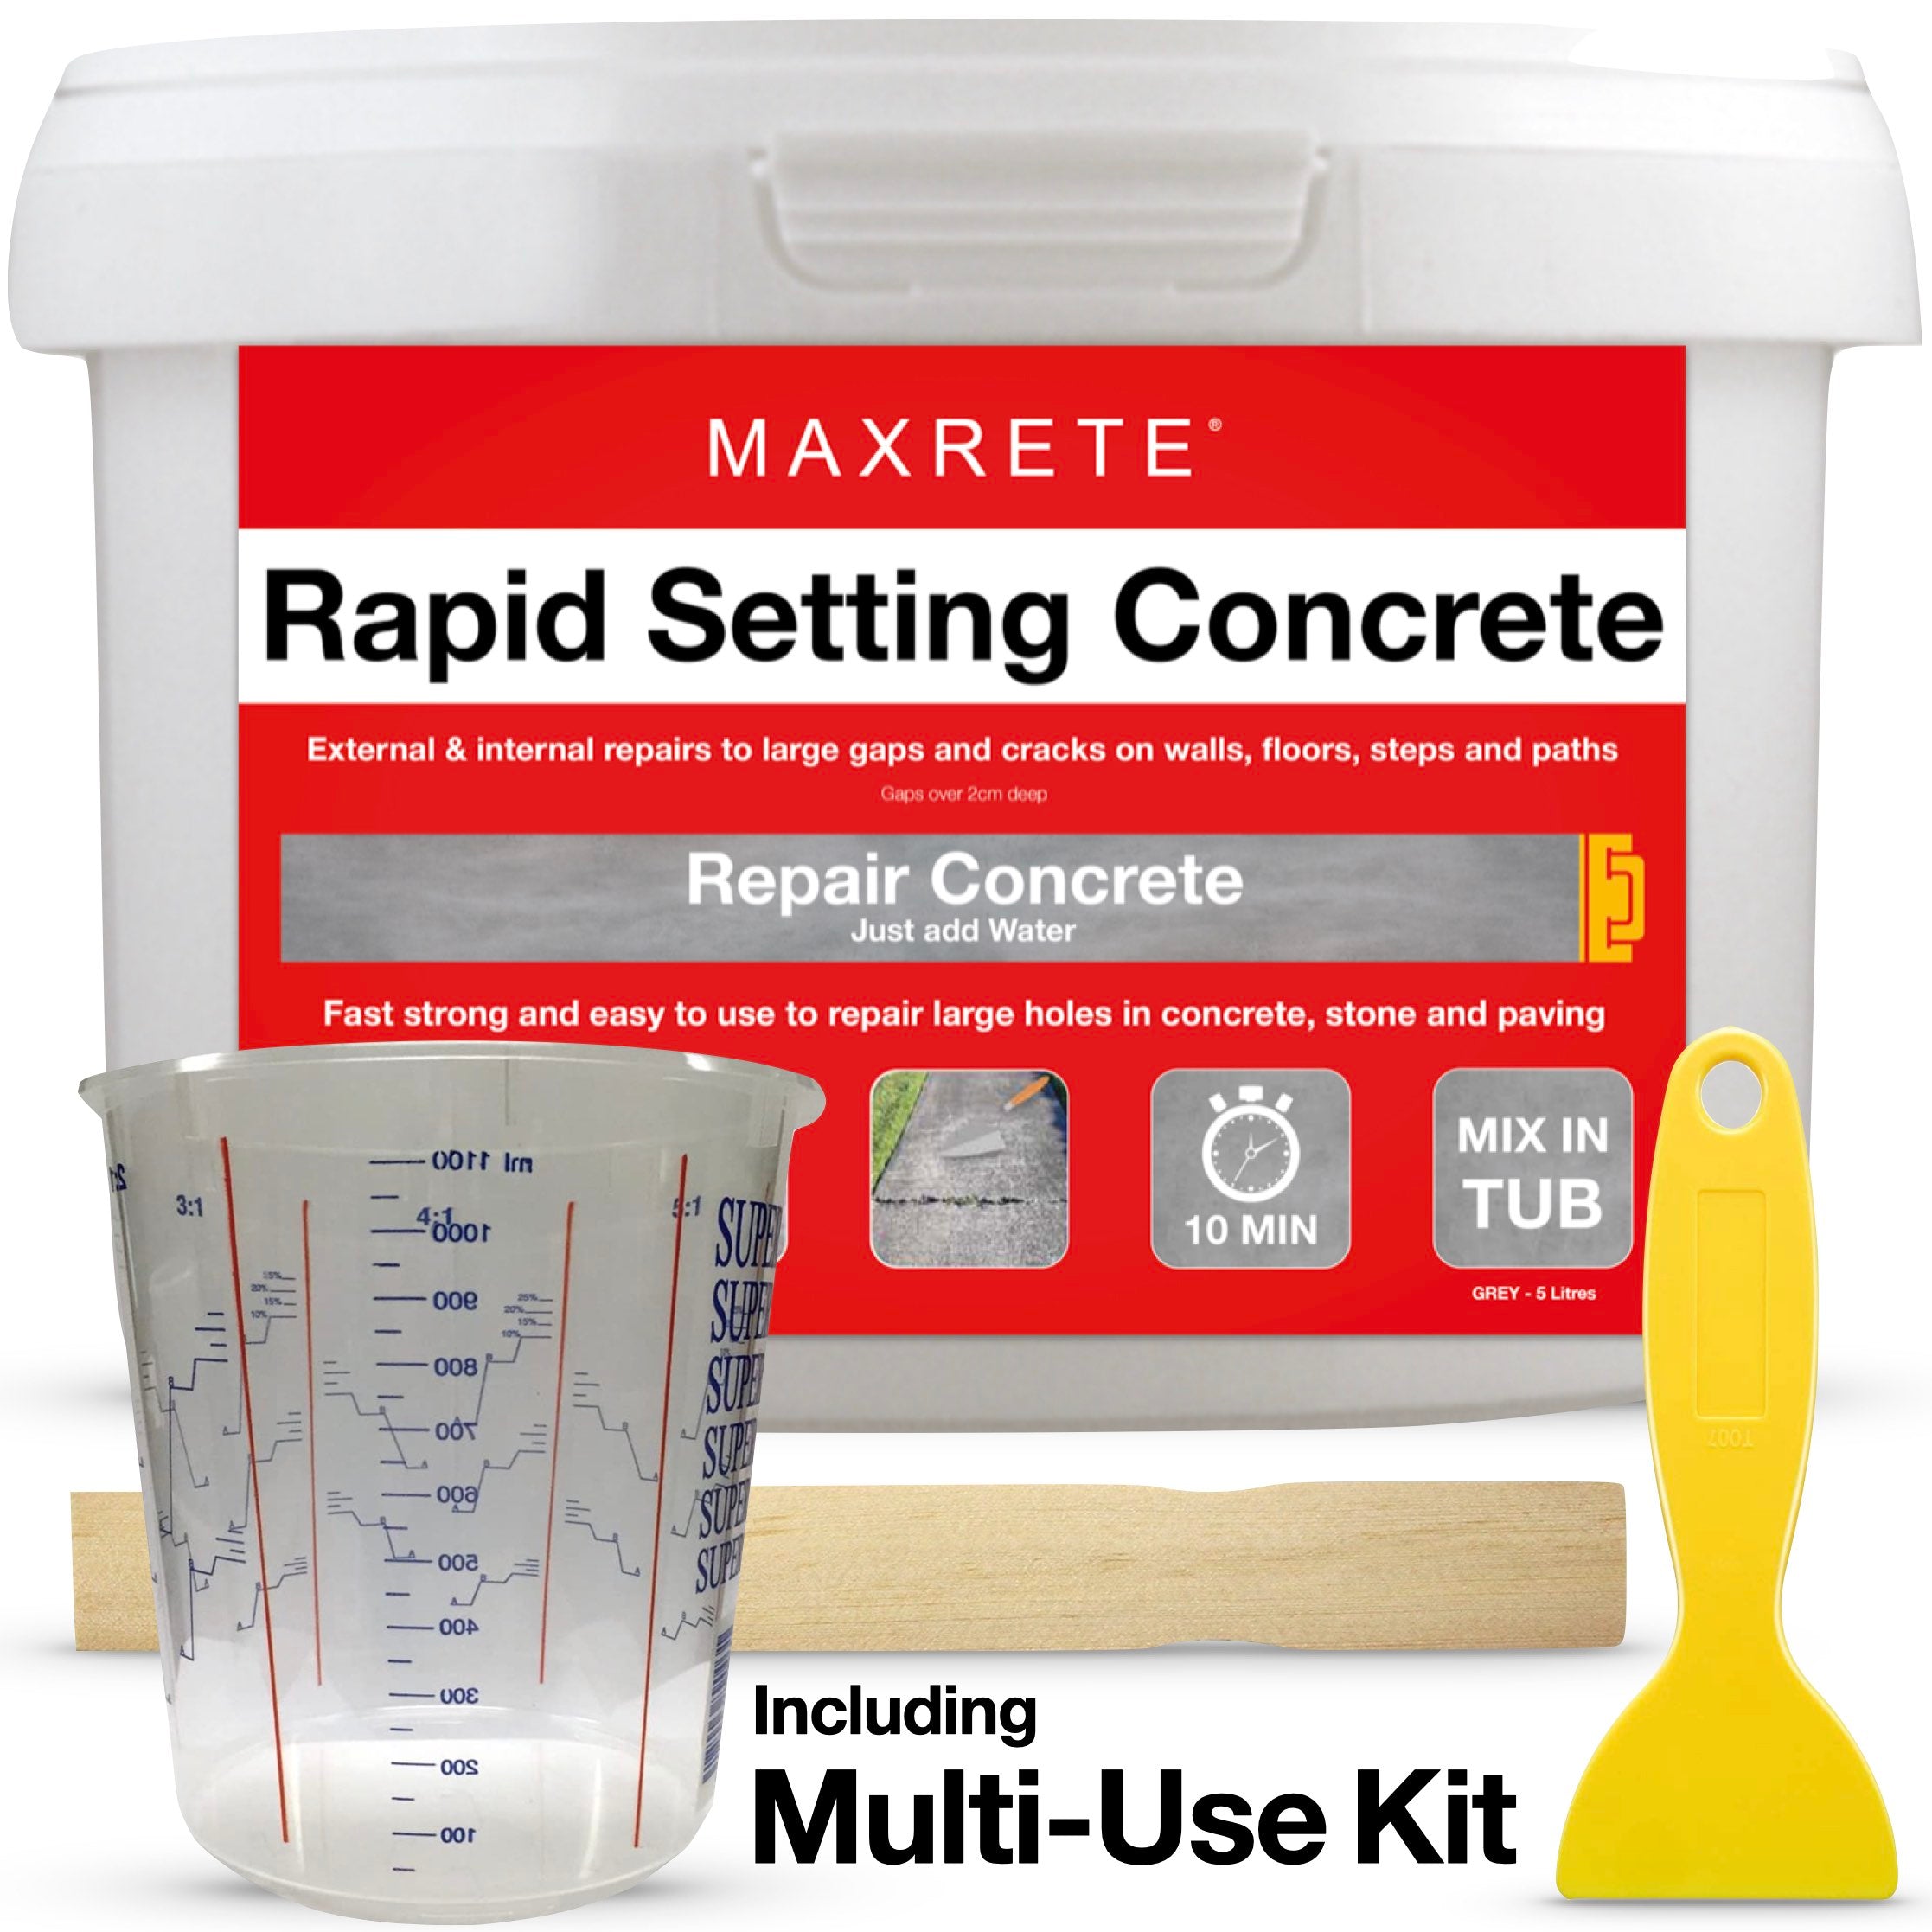 Rapid Setting Concrete 'Mix in Tub' Incl Multi-Use Kit